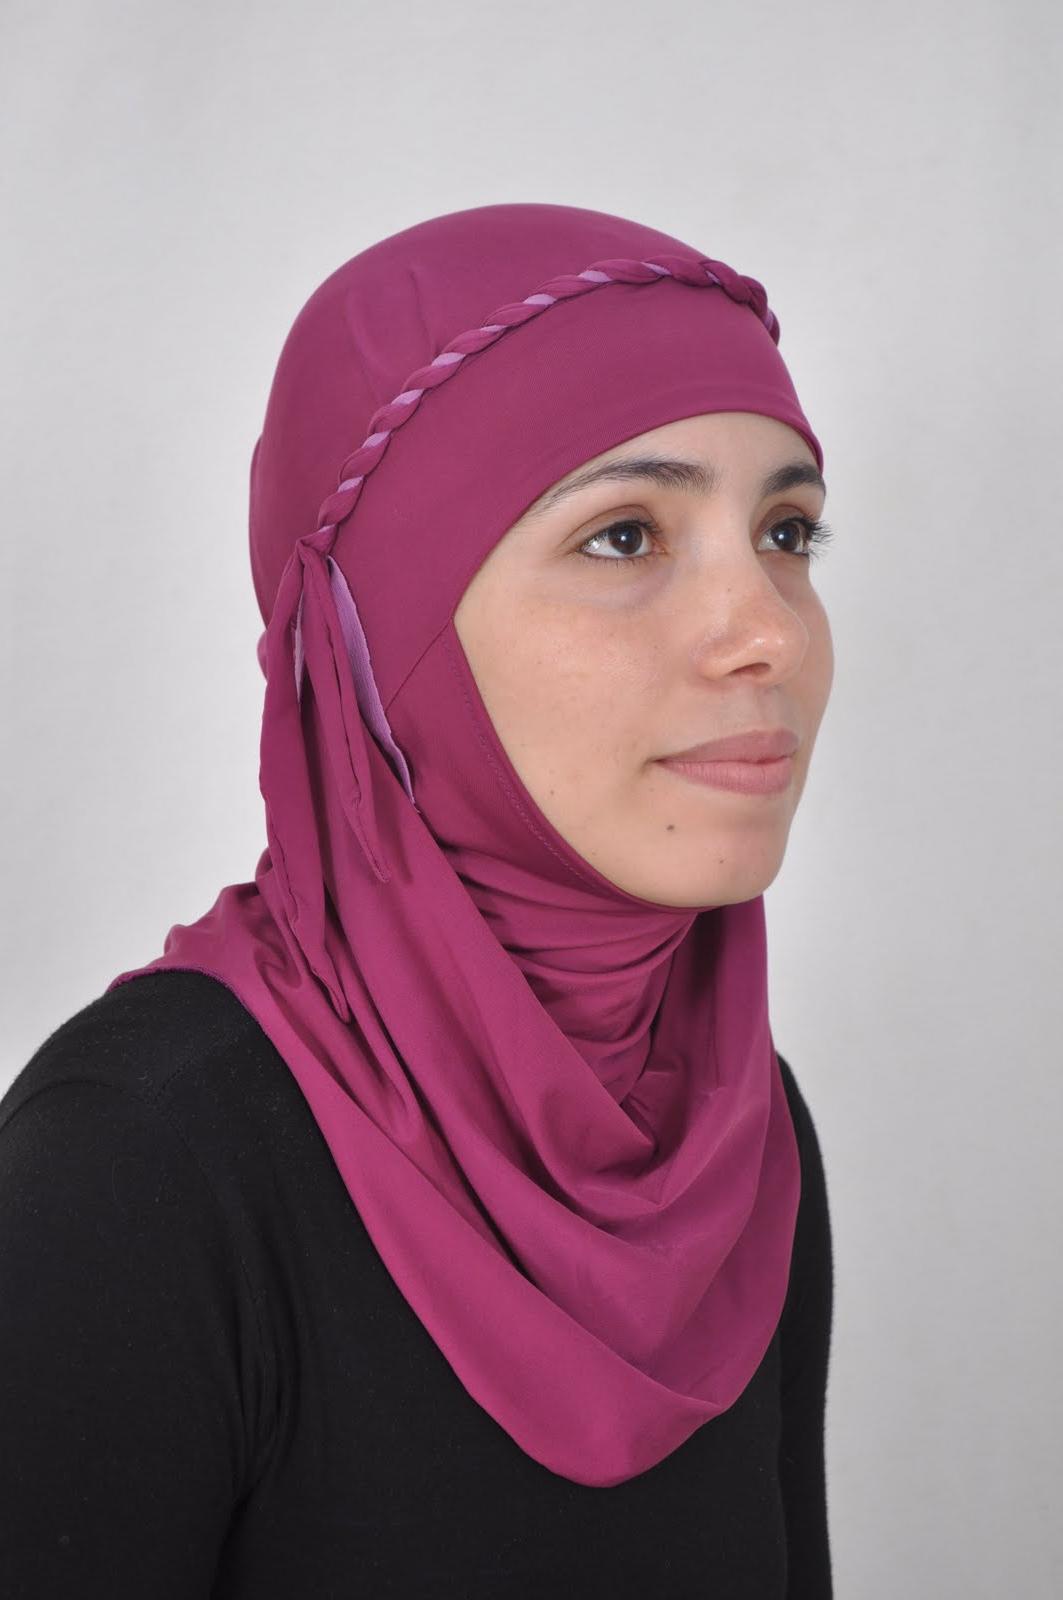 the Moroccan-based hijab